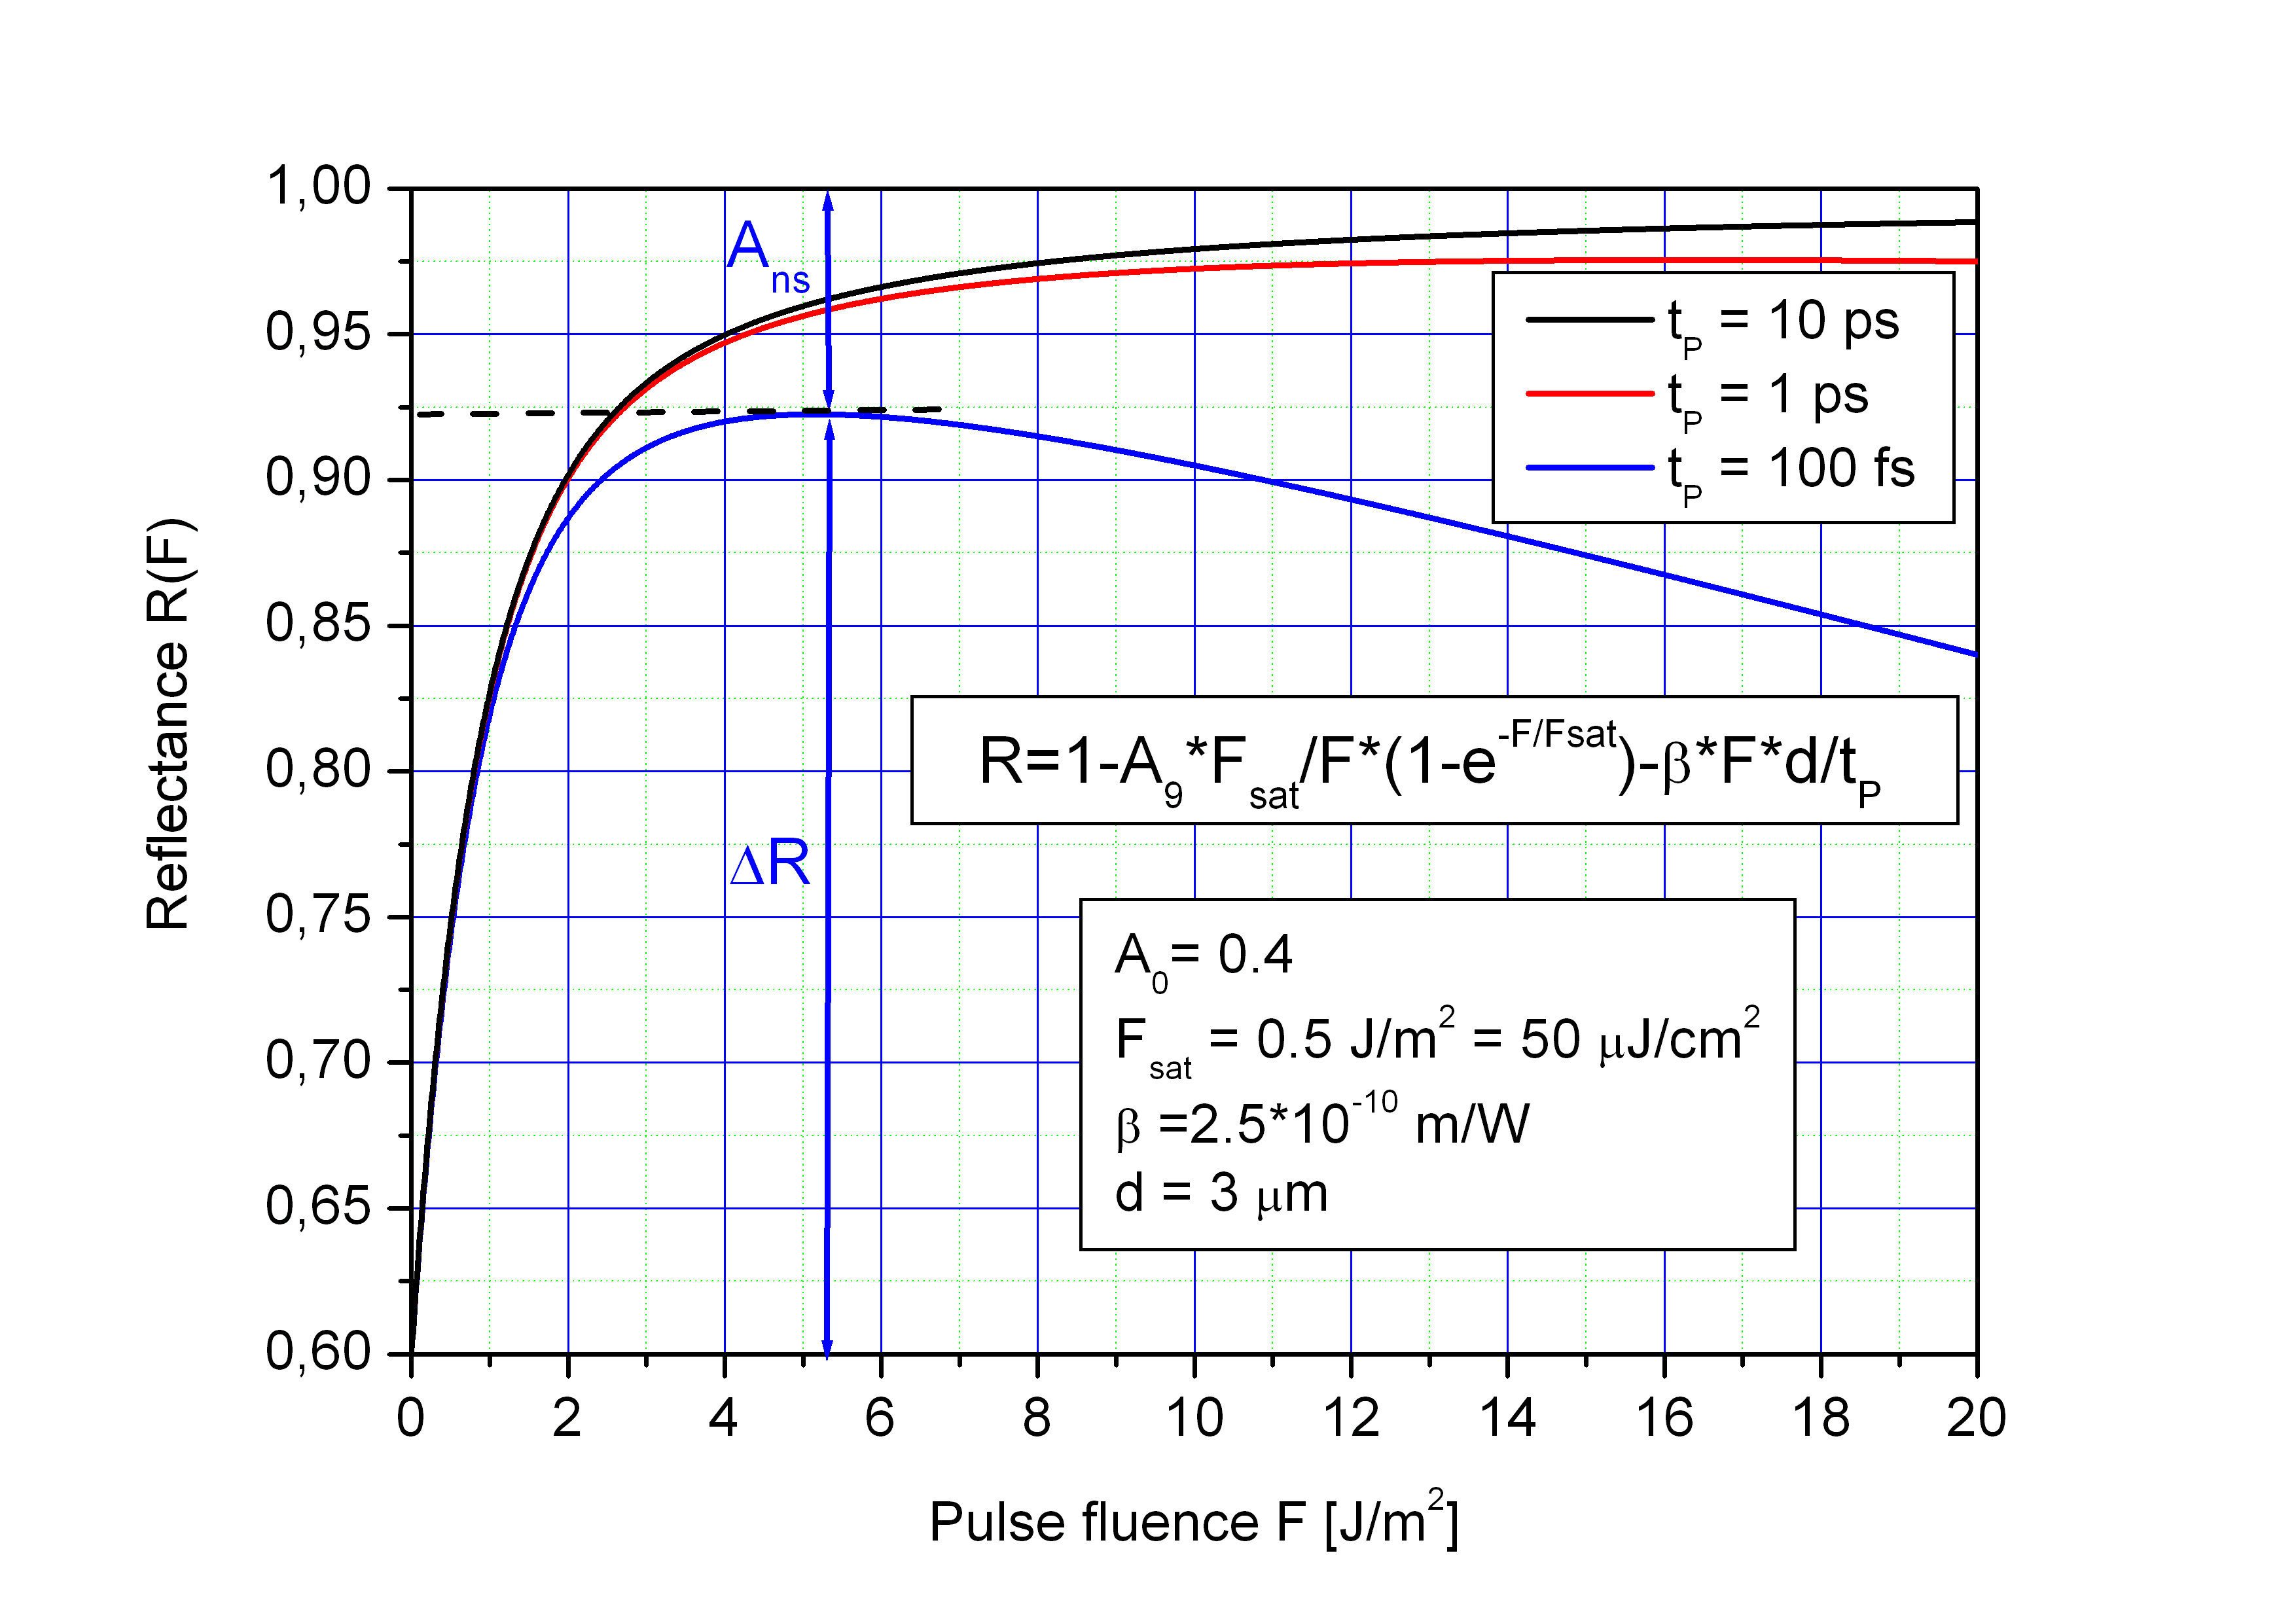 Figure absorption, linear scale